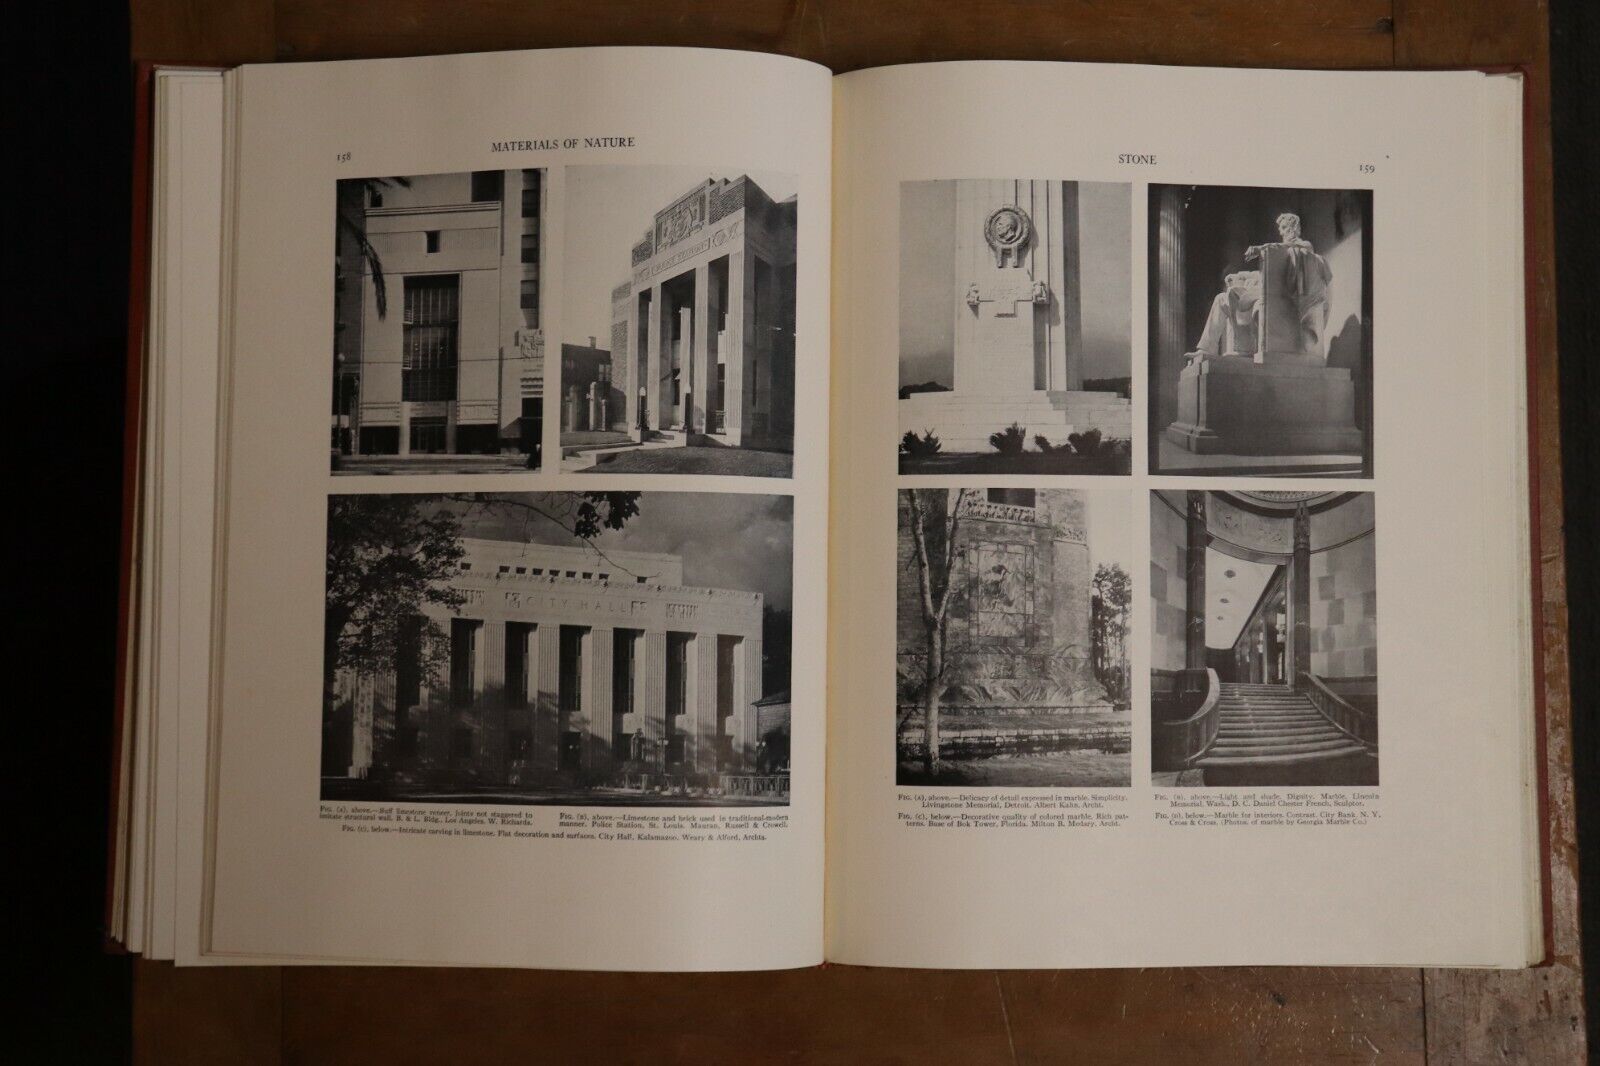 Architectural Design by Ernest Pickering - 1941 - Antique Architecture Book